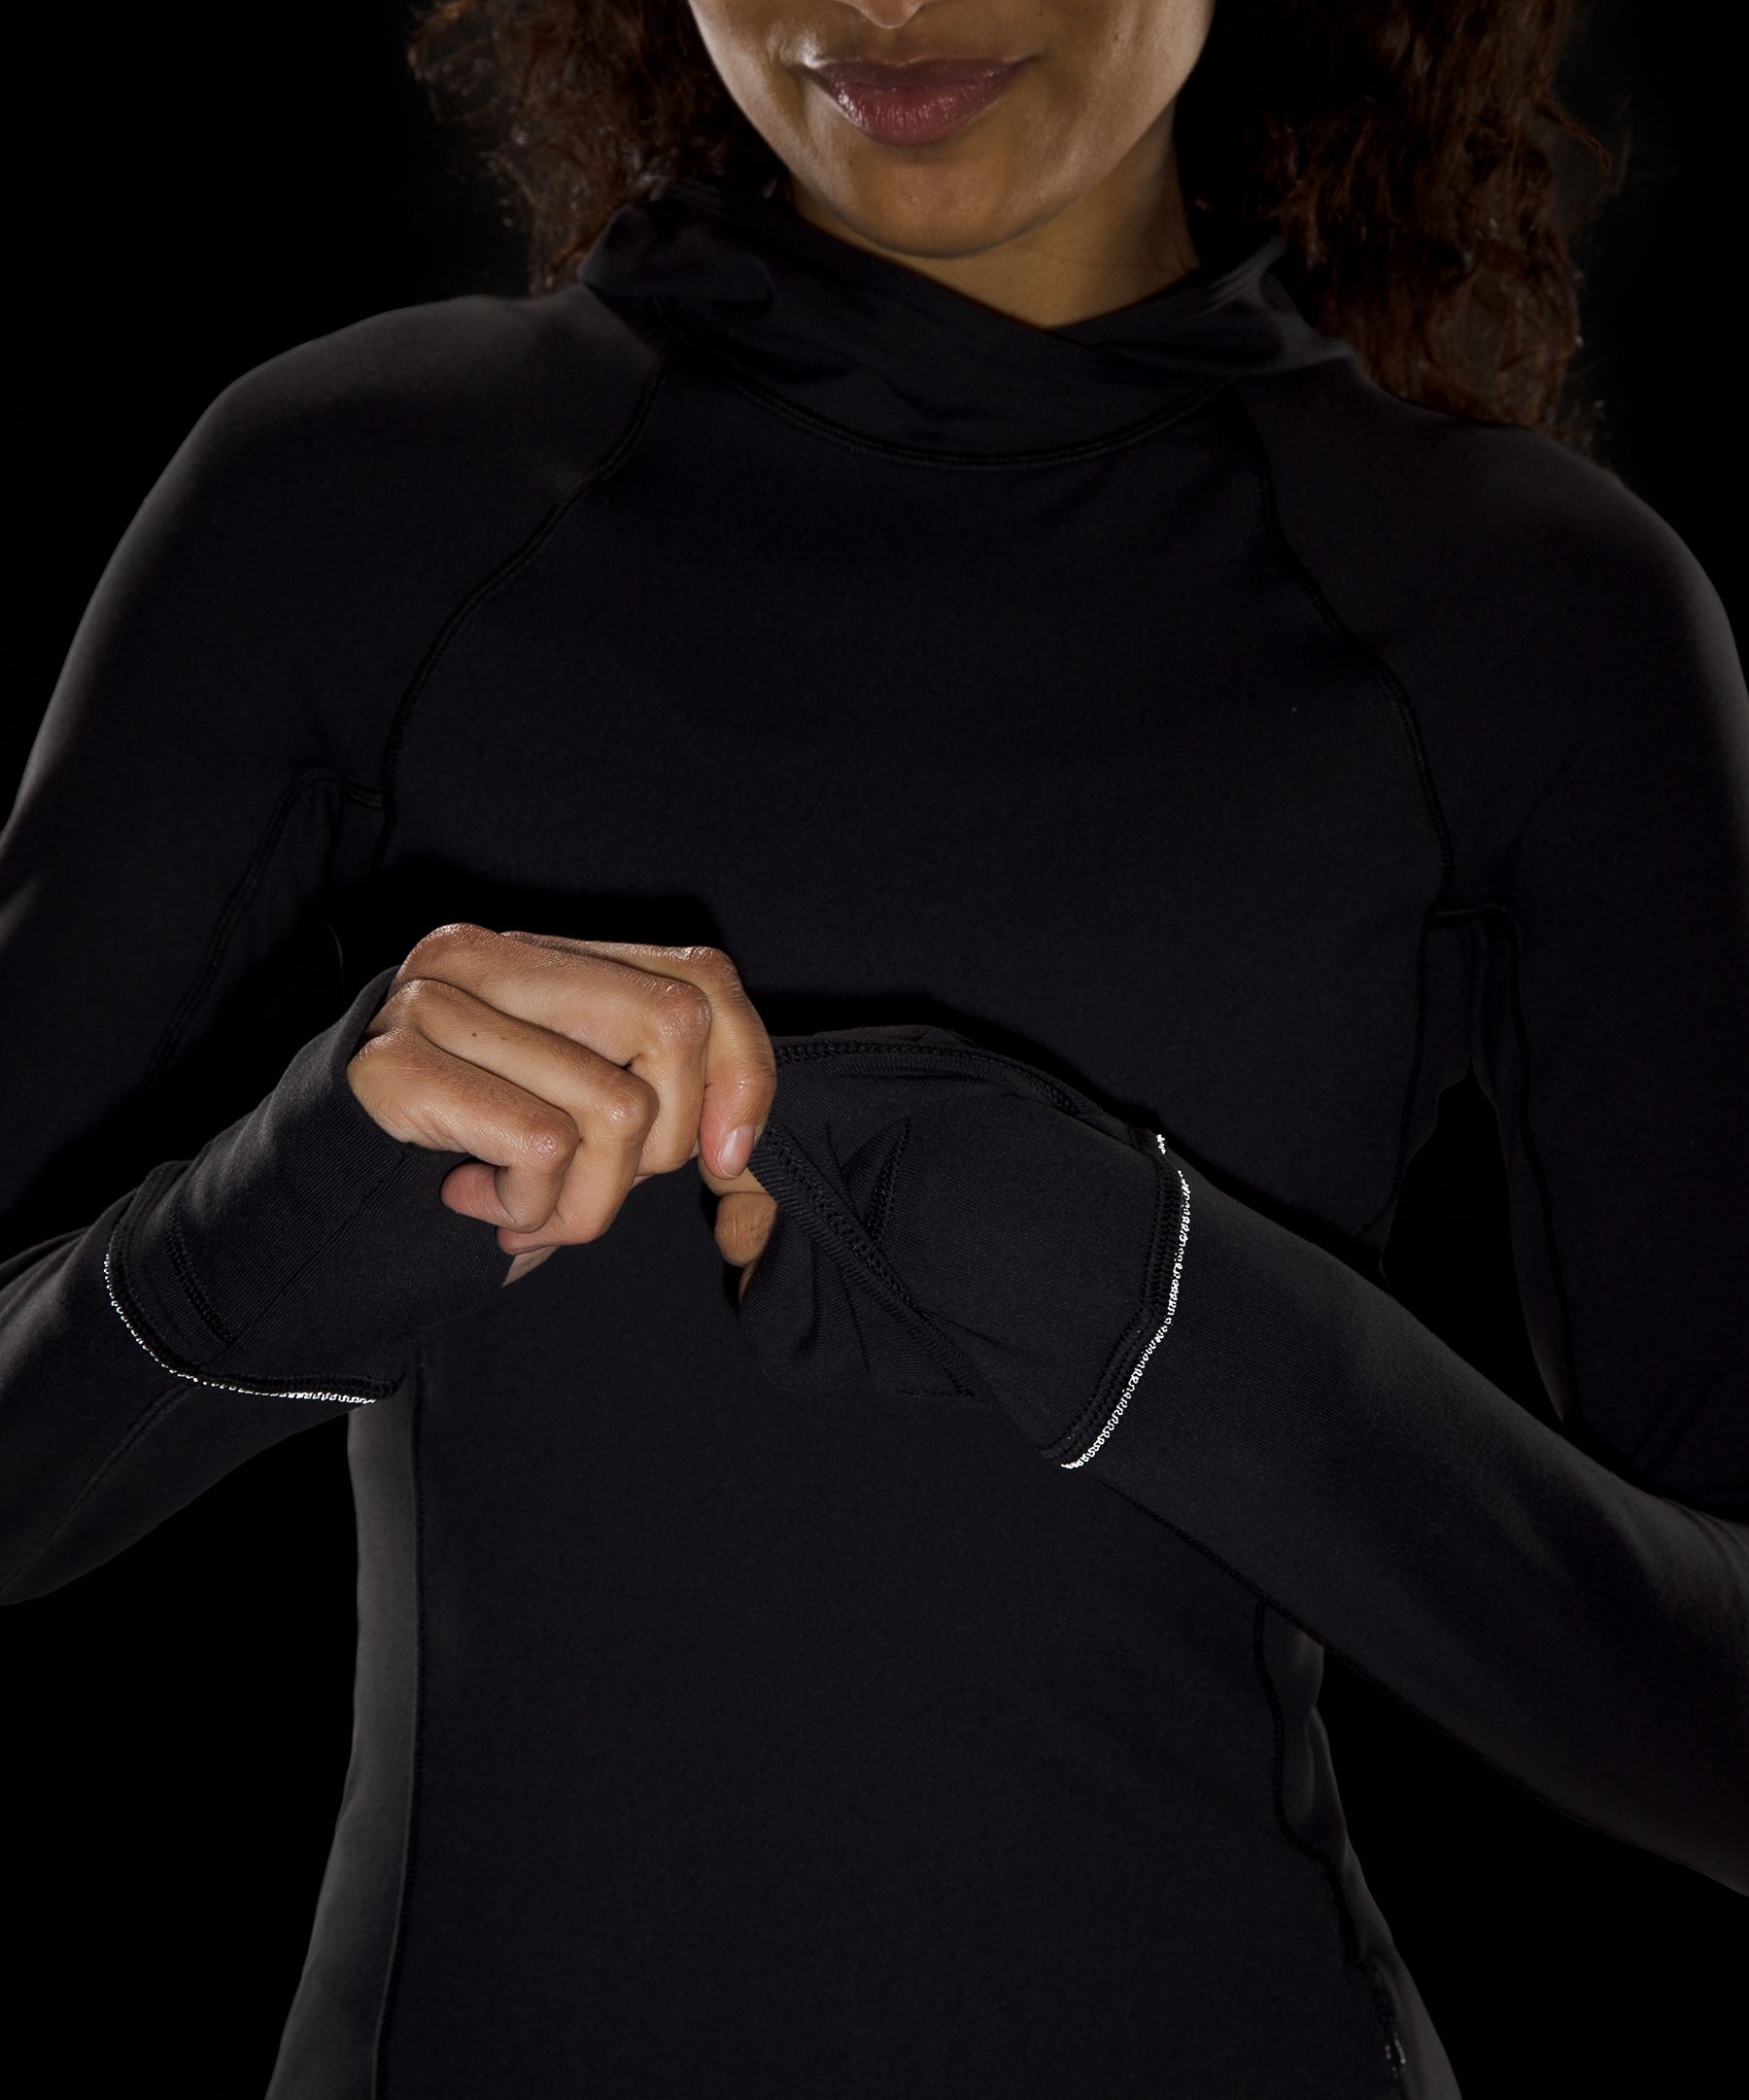 Lululemon Star Runner Long Sleeve Black Rulu Reflective Top Shirt